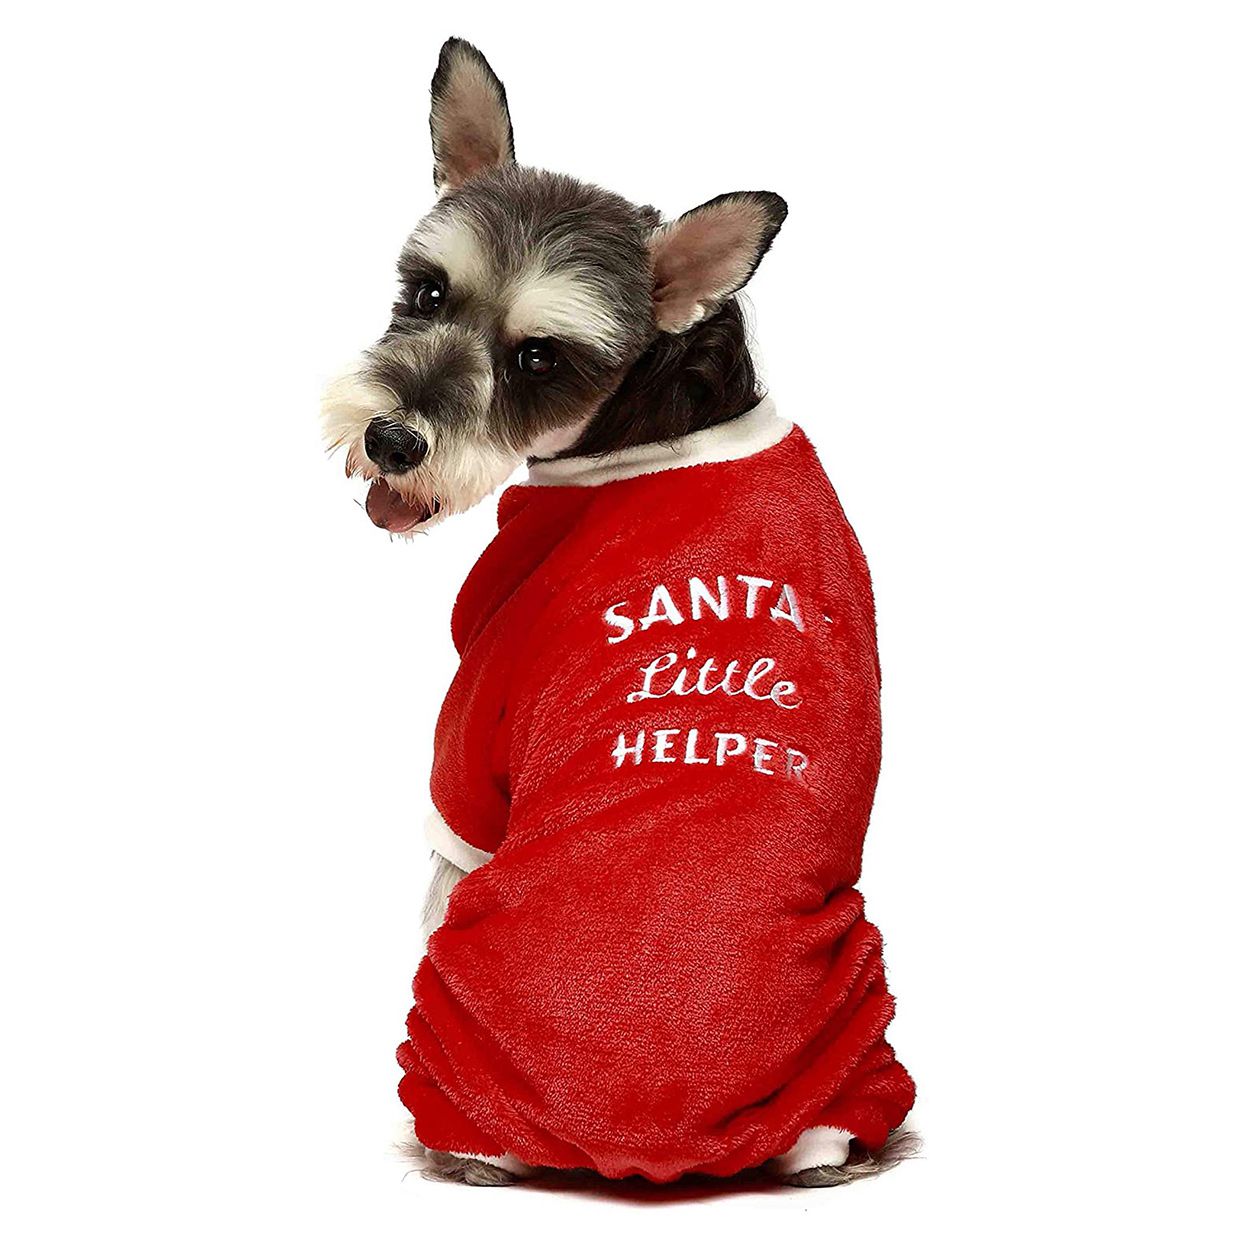 Dog wearing Santa’s Little Helper Pet Pajamas